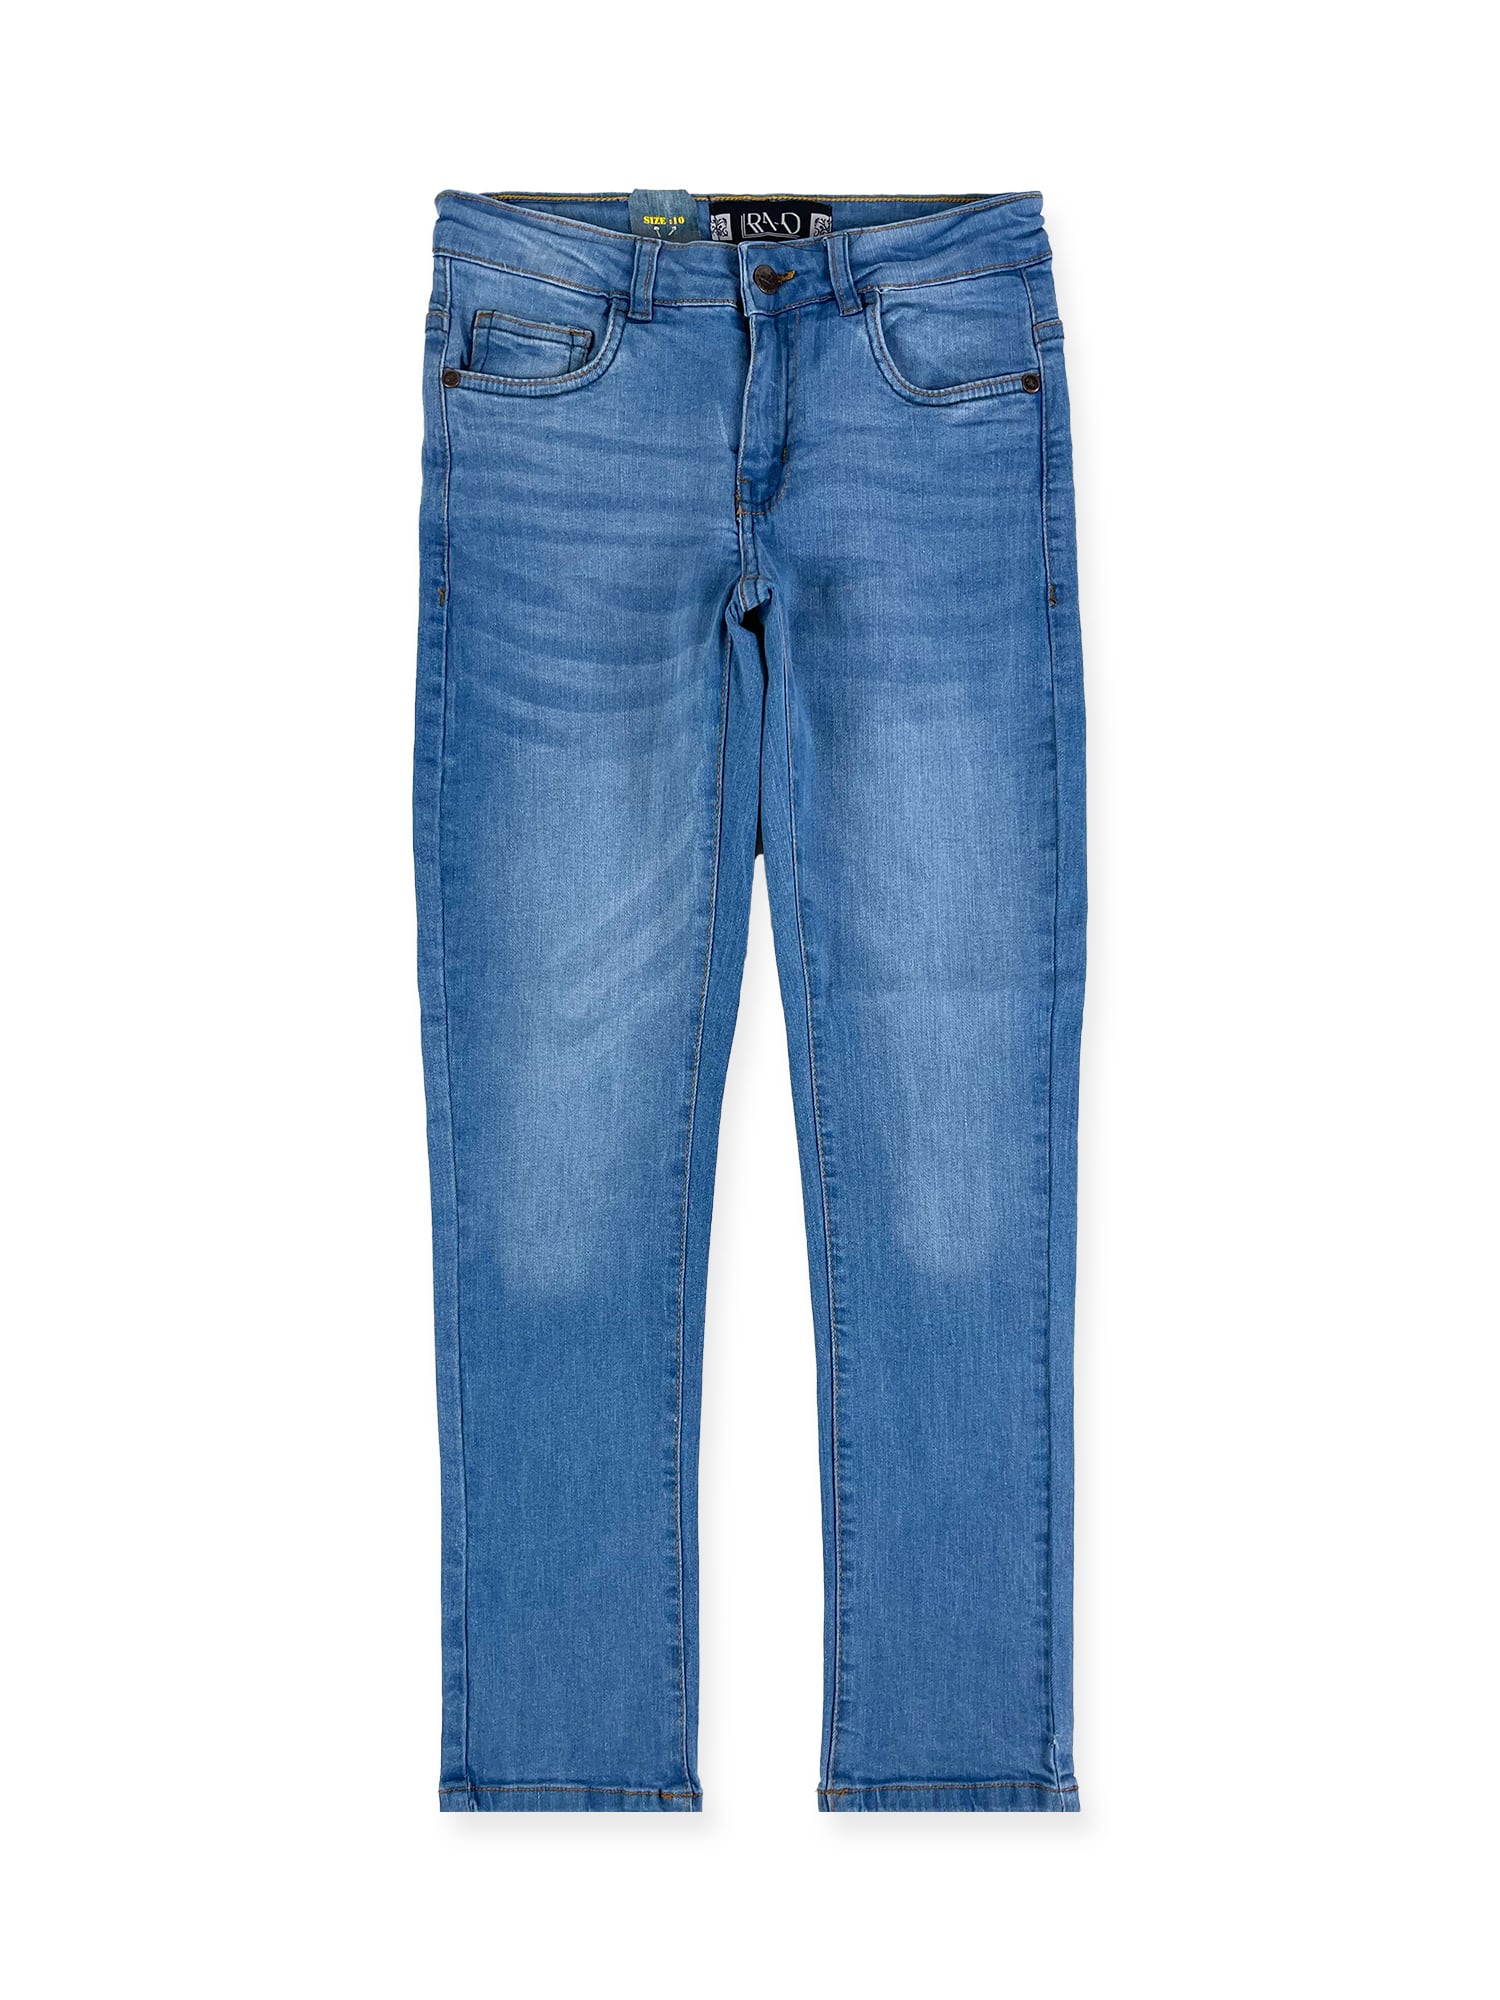 Wholesale Boys' Faded Skinny Jeans #302 Light Wash